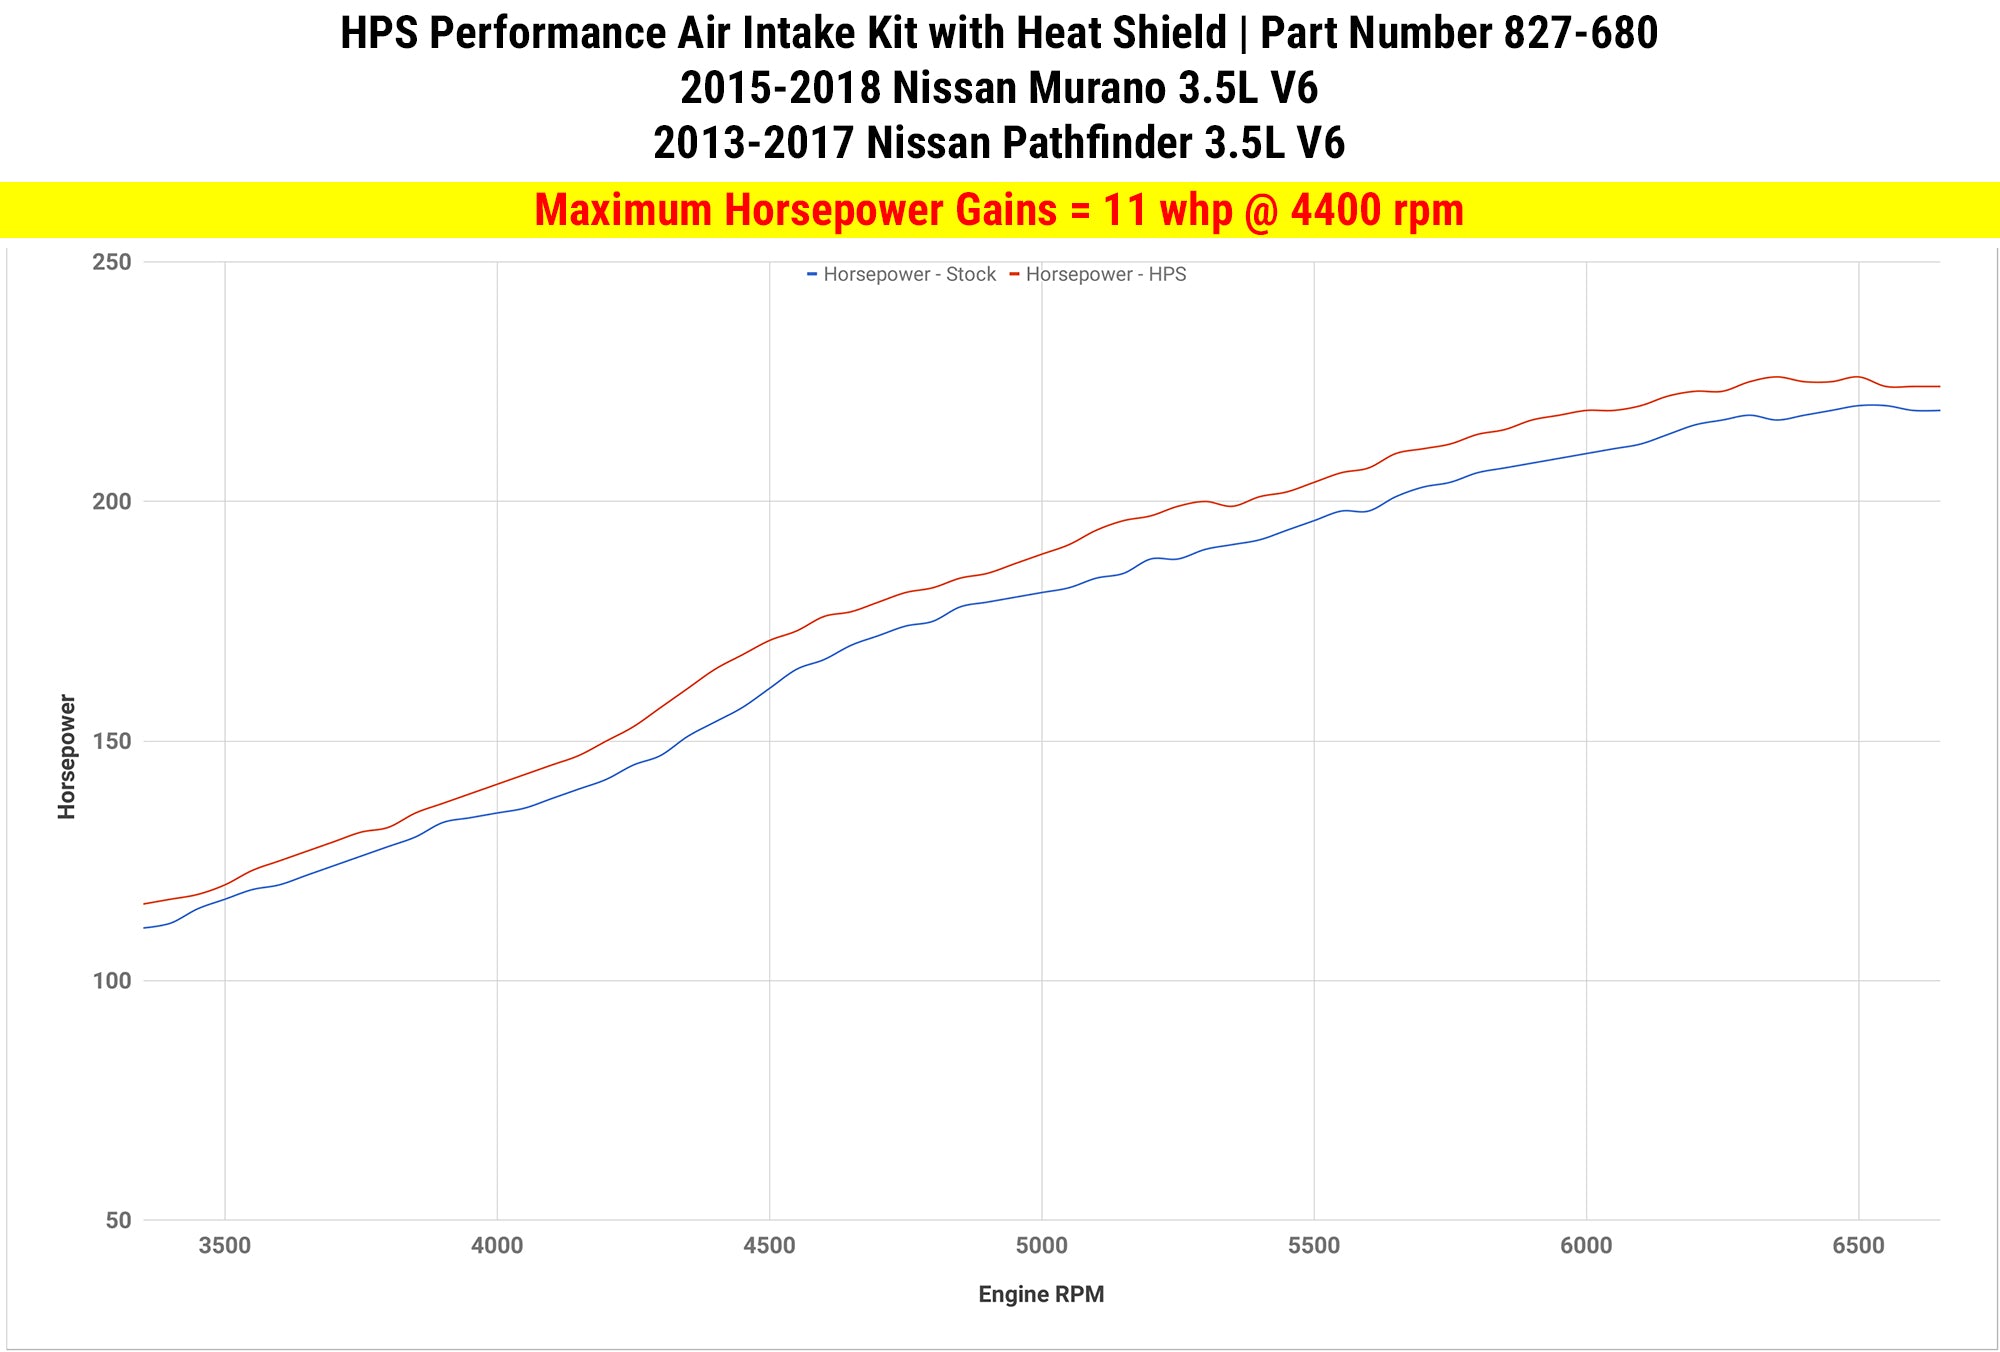 Dyno proven gains 11 whp HPS Performance Shortram Air Intake Kit 2013-2017 Nissan Pathfinder 3.5L V6 827-680BL